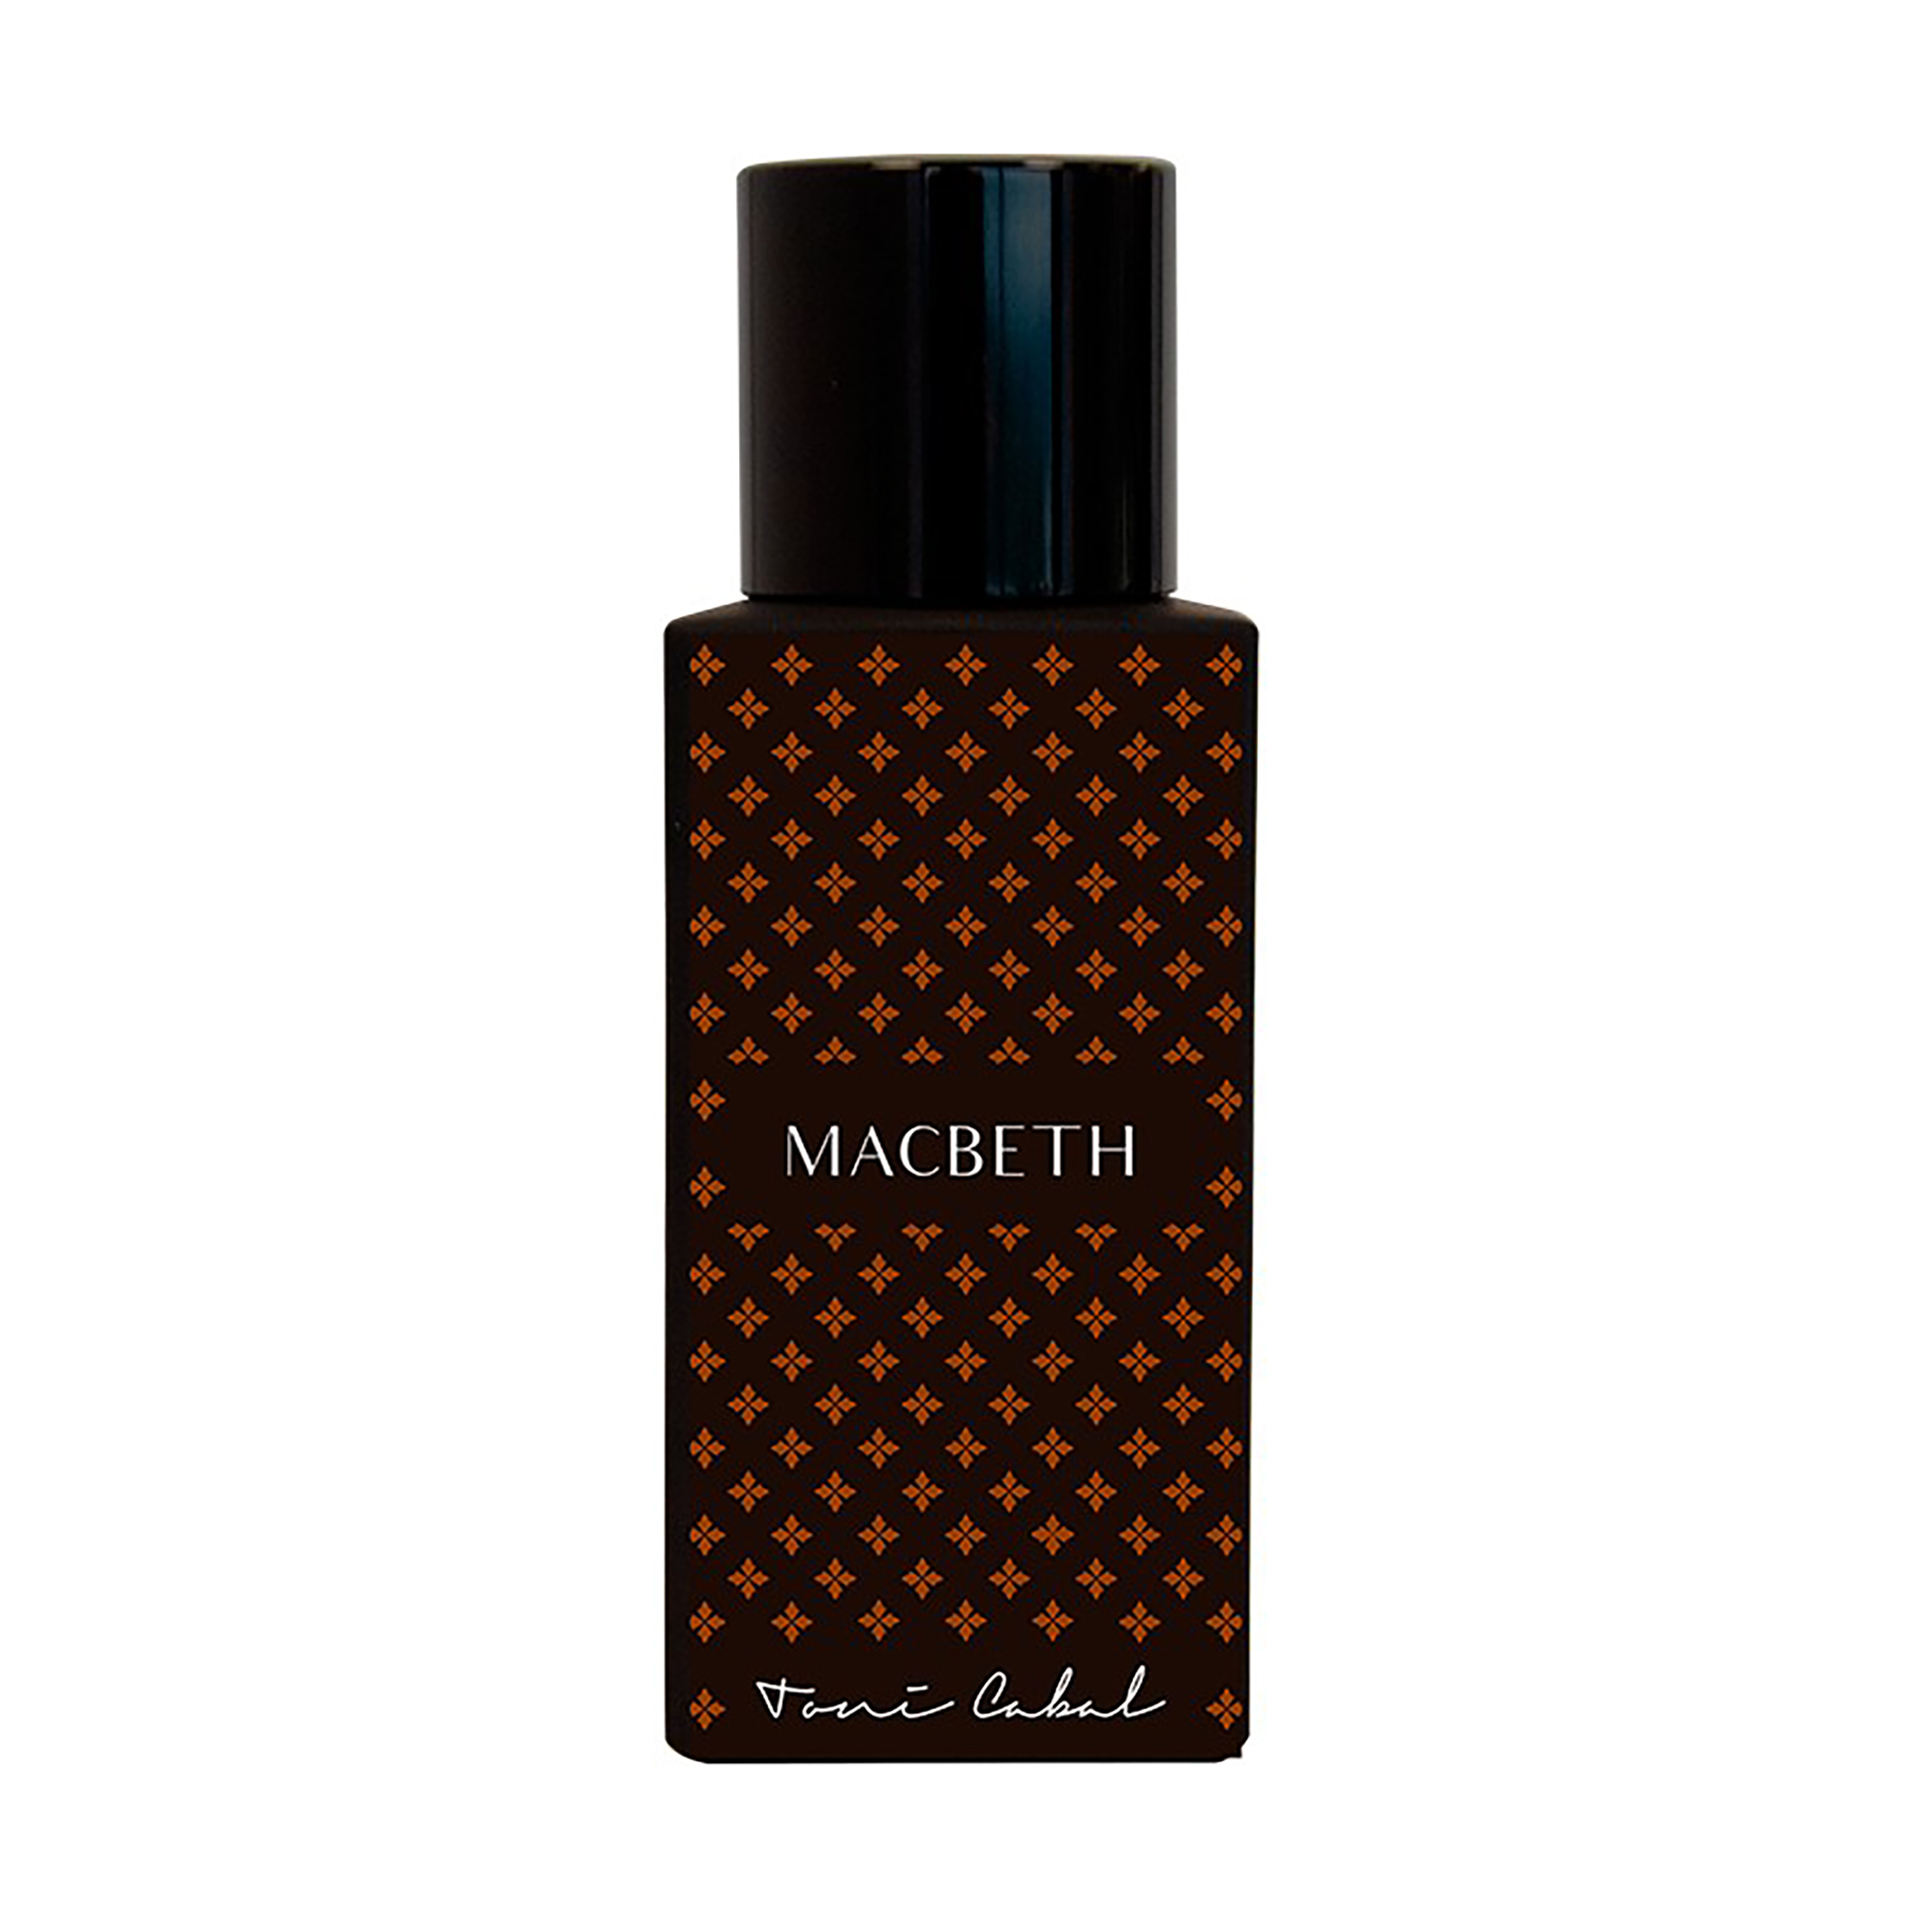 macbeth 50ml toni cabal daring light perfumes niche barcelona